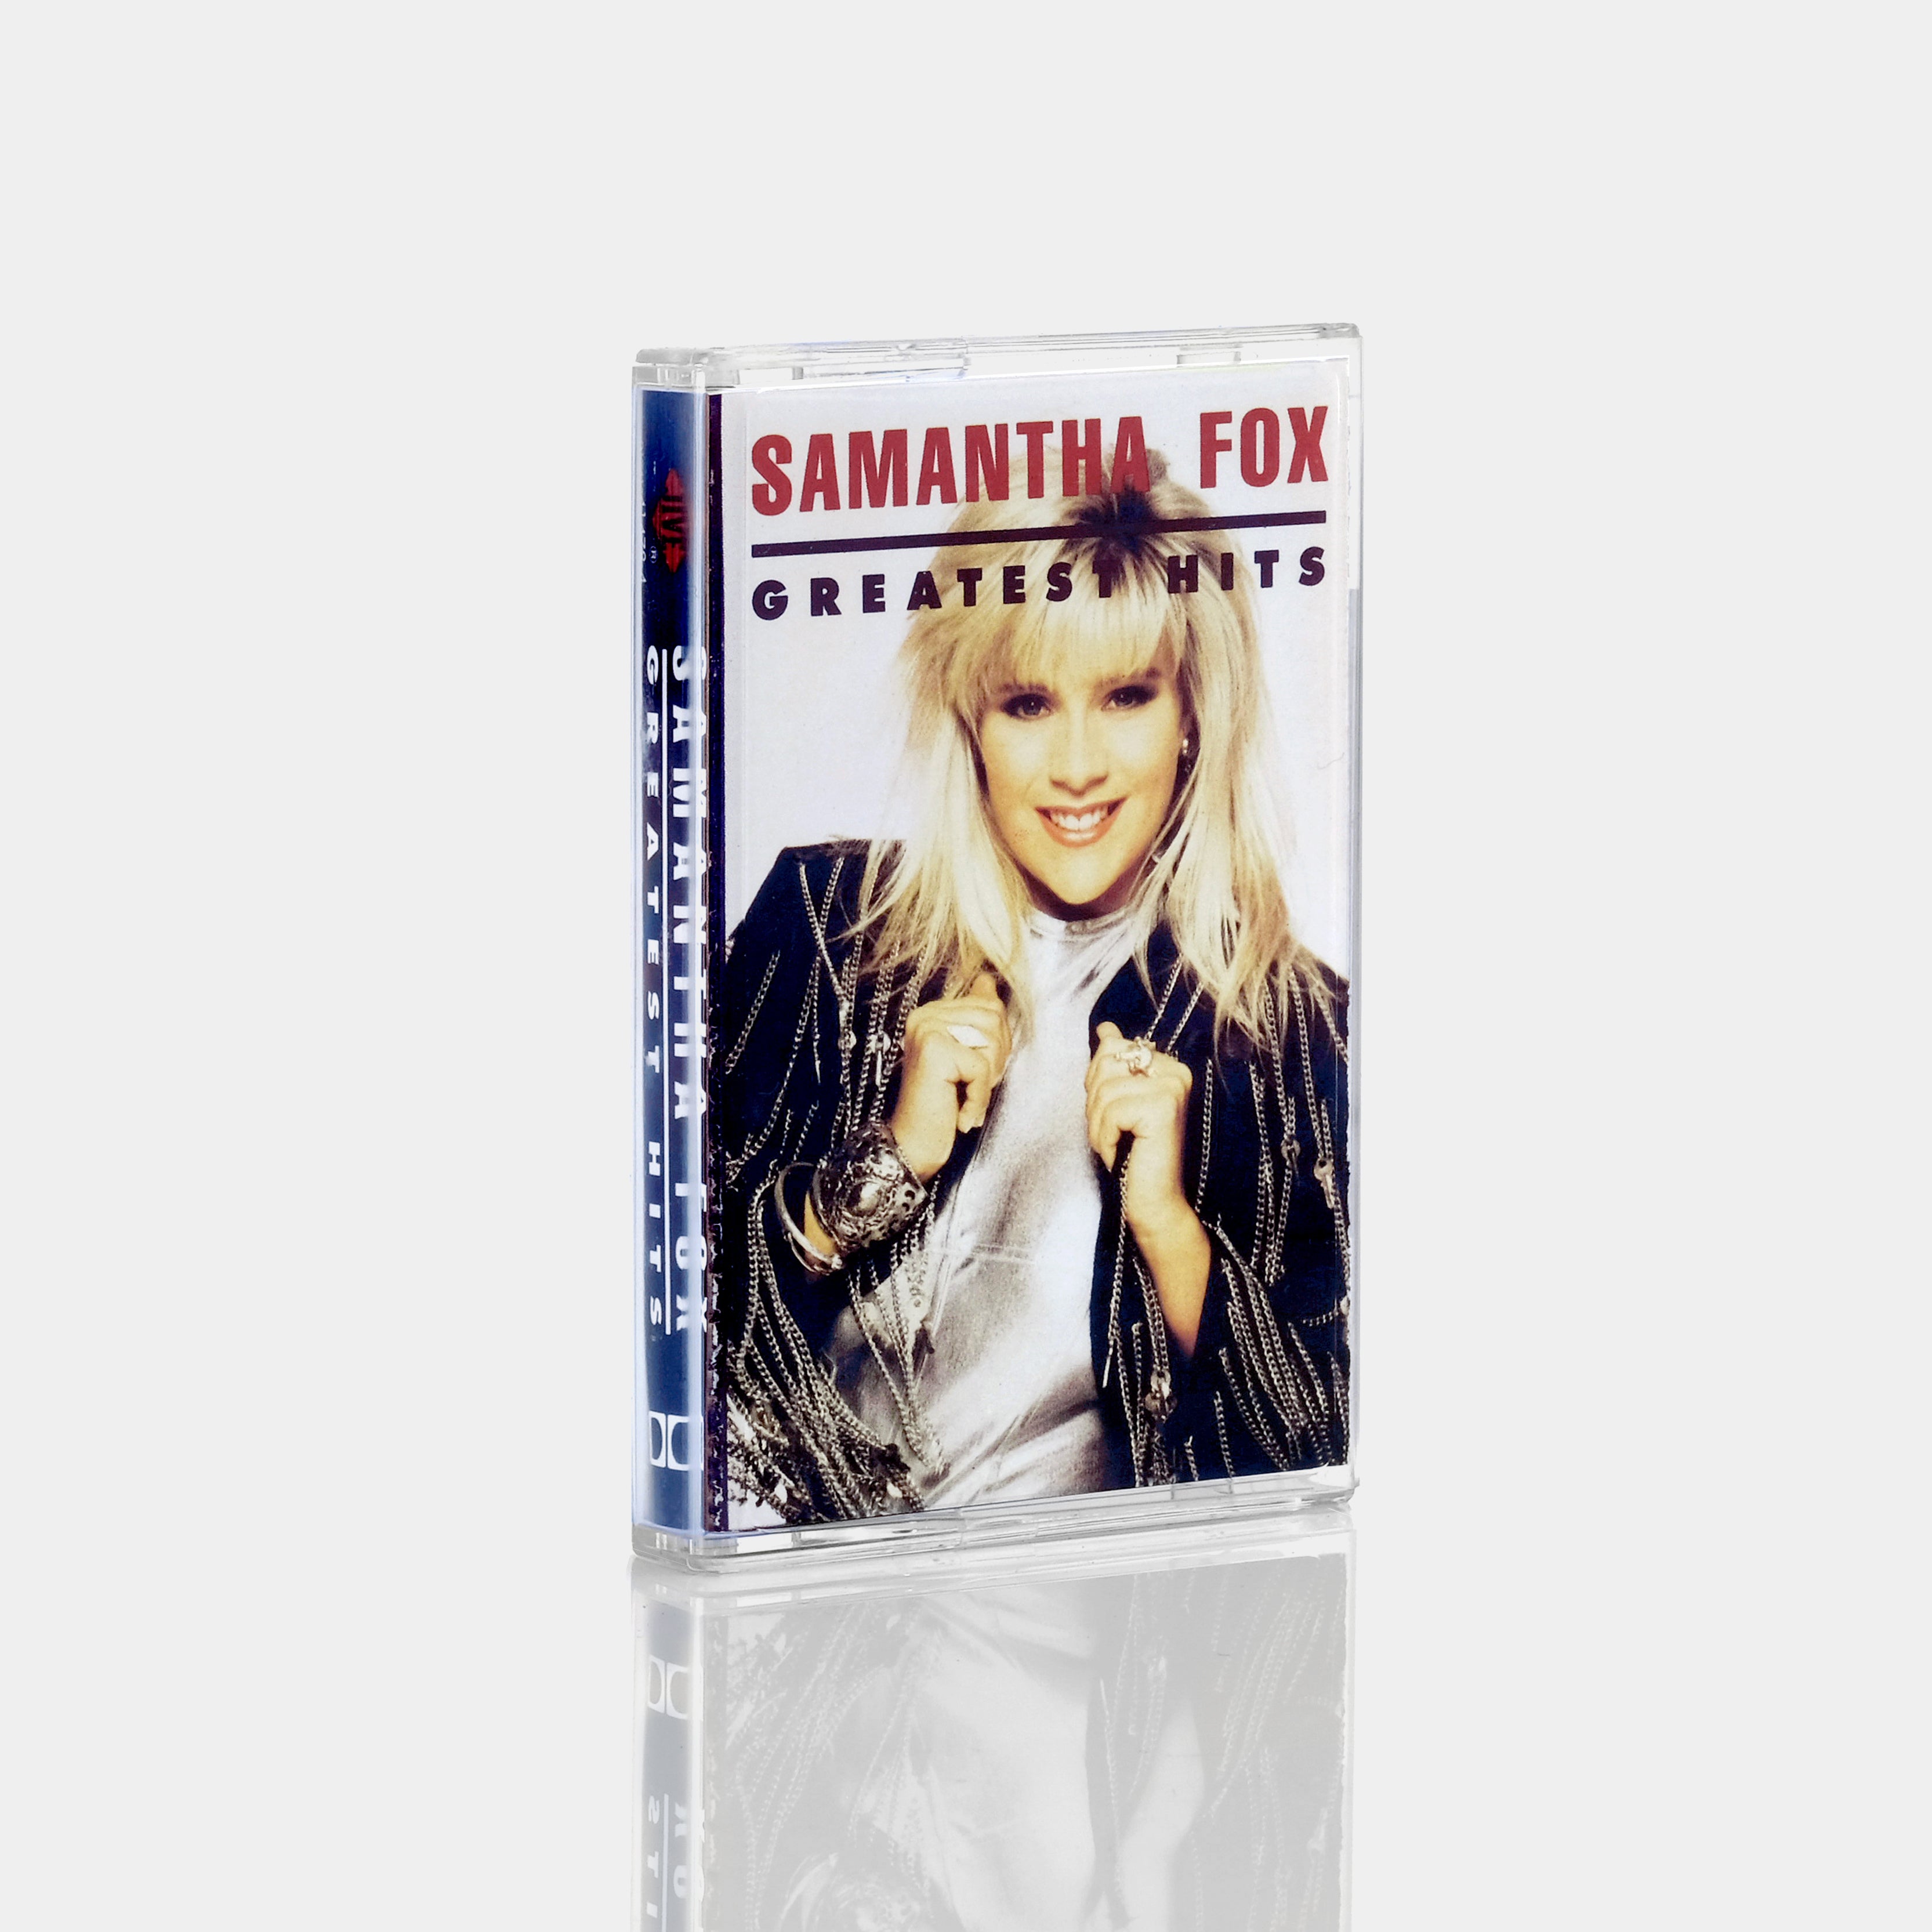 Samantha Fox - Greatest Hits Cassette Tape